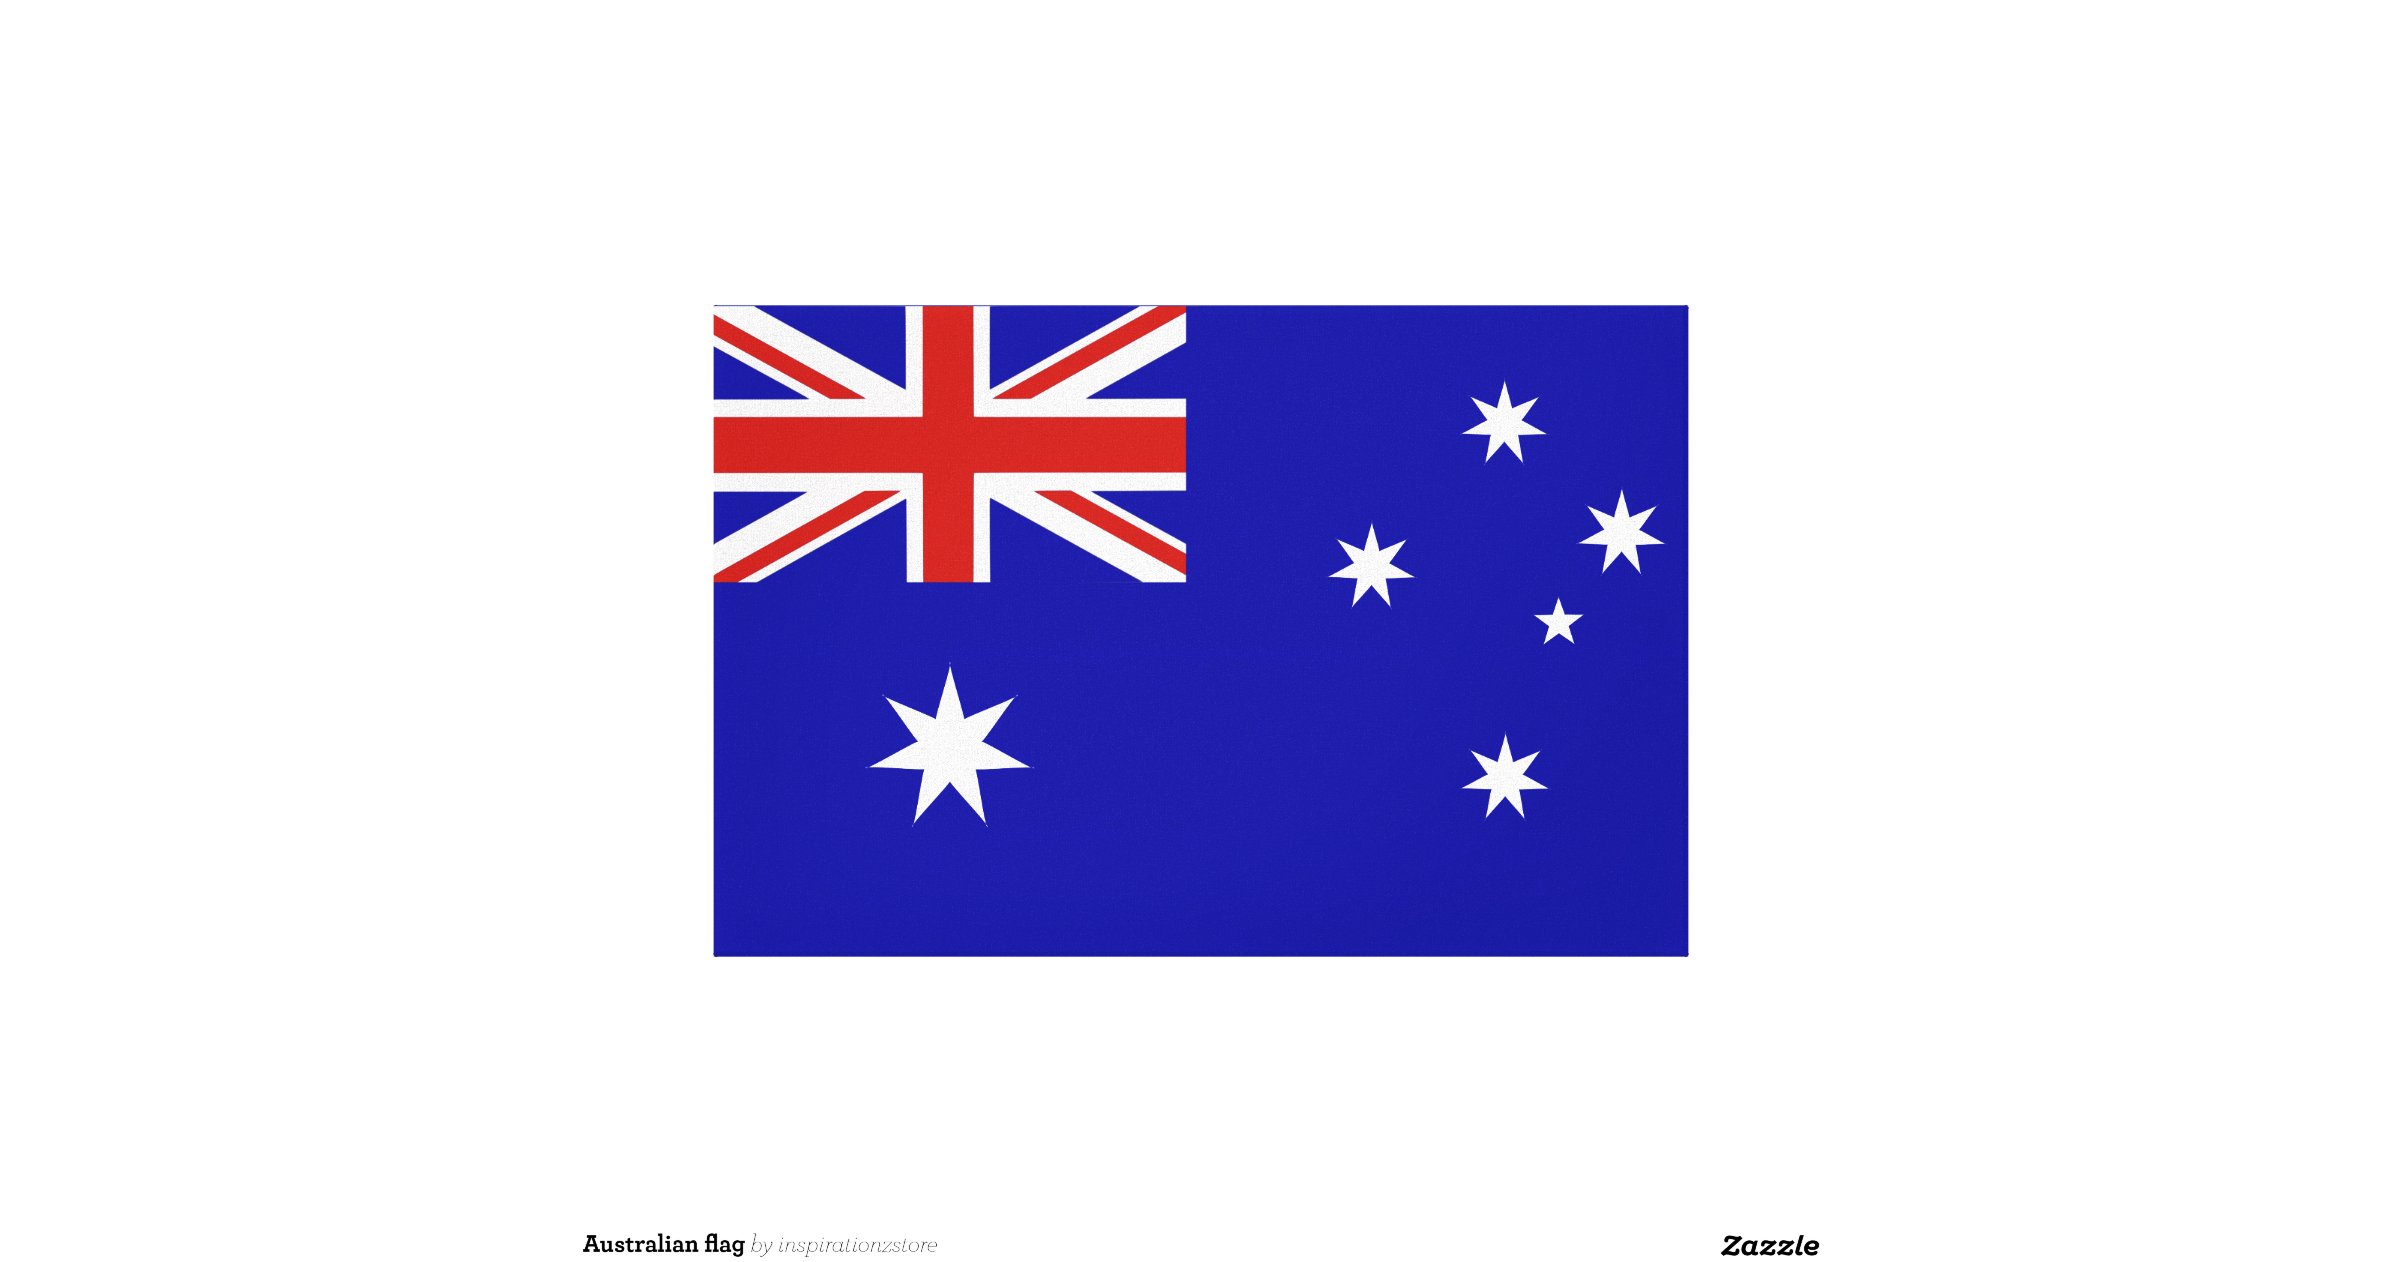 Australianflagcanvasprint R9c5482dce3ca4404a9341e93fdac0dd7vkgu